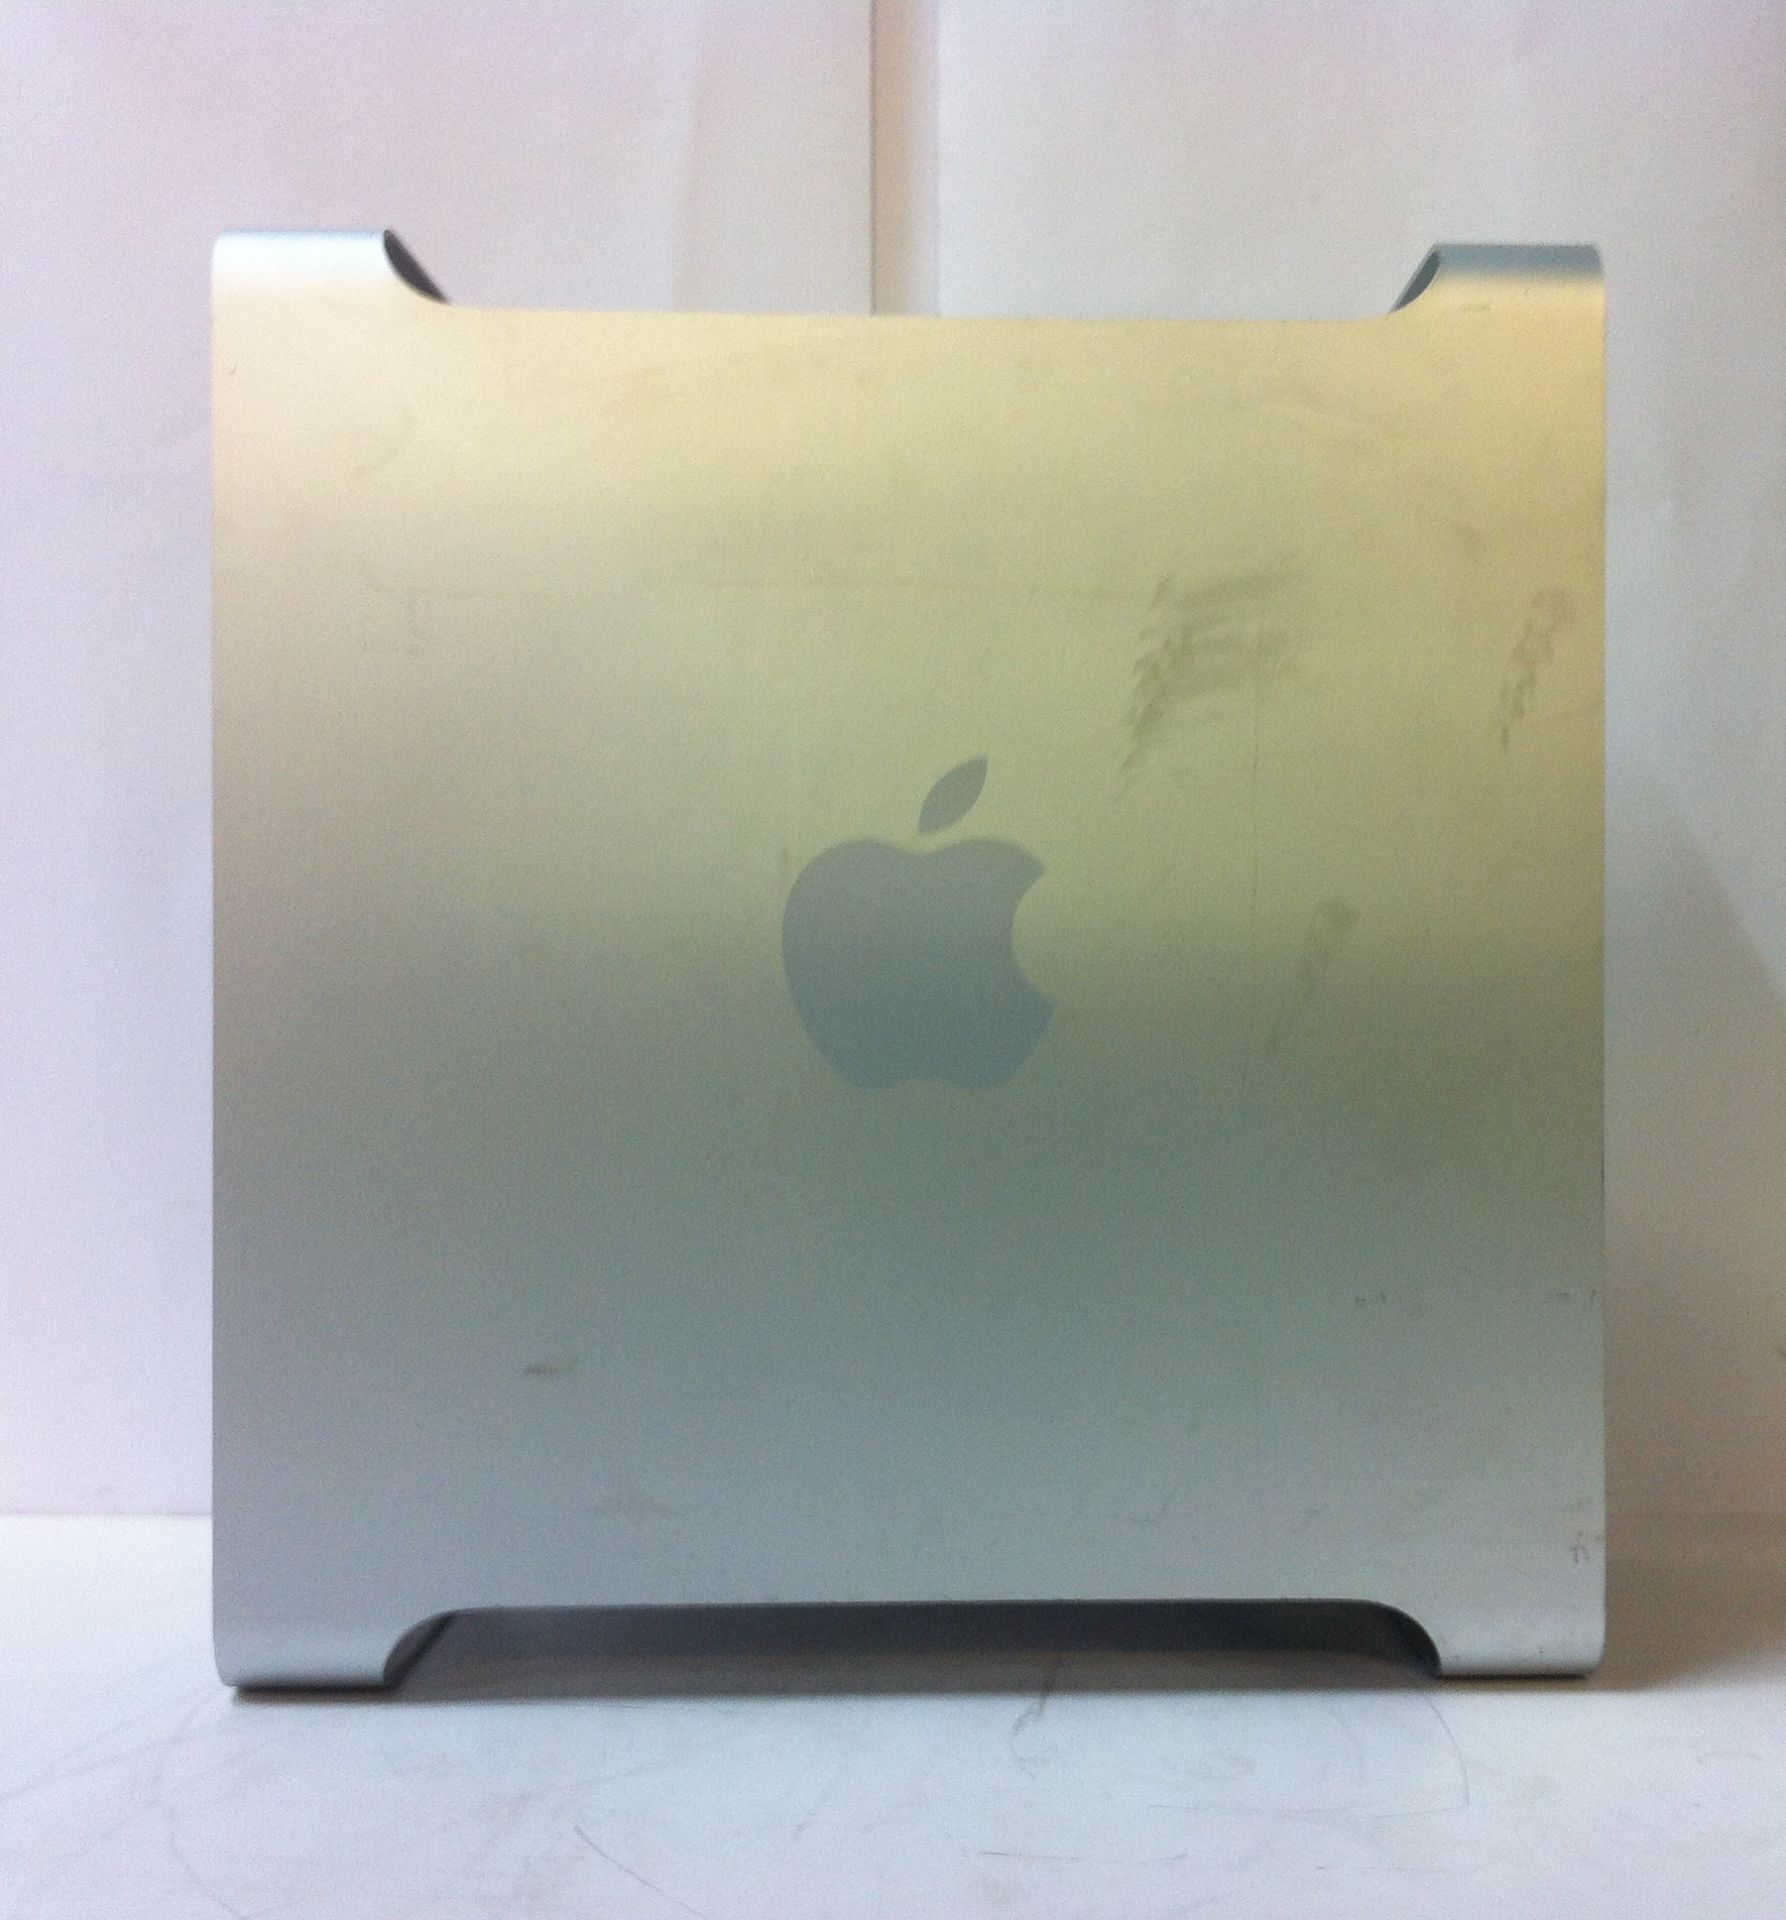 Apple MAC Desktop PC Tower - Bild 2 aus 3